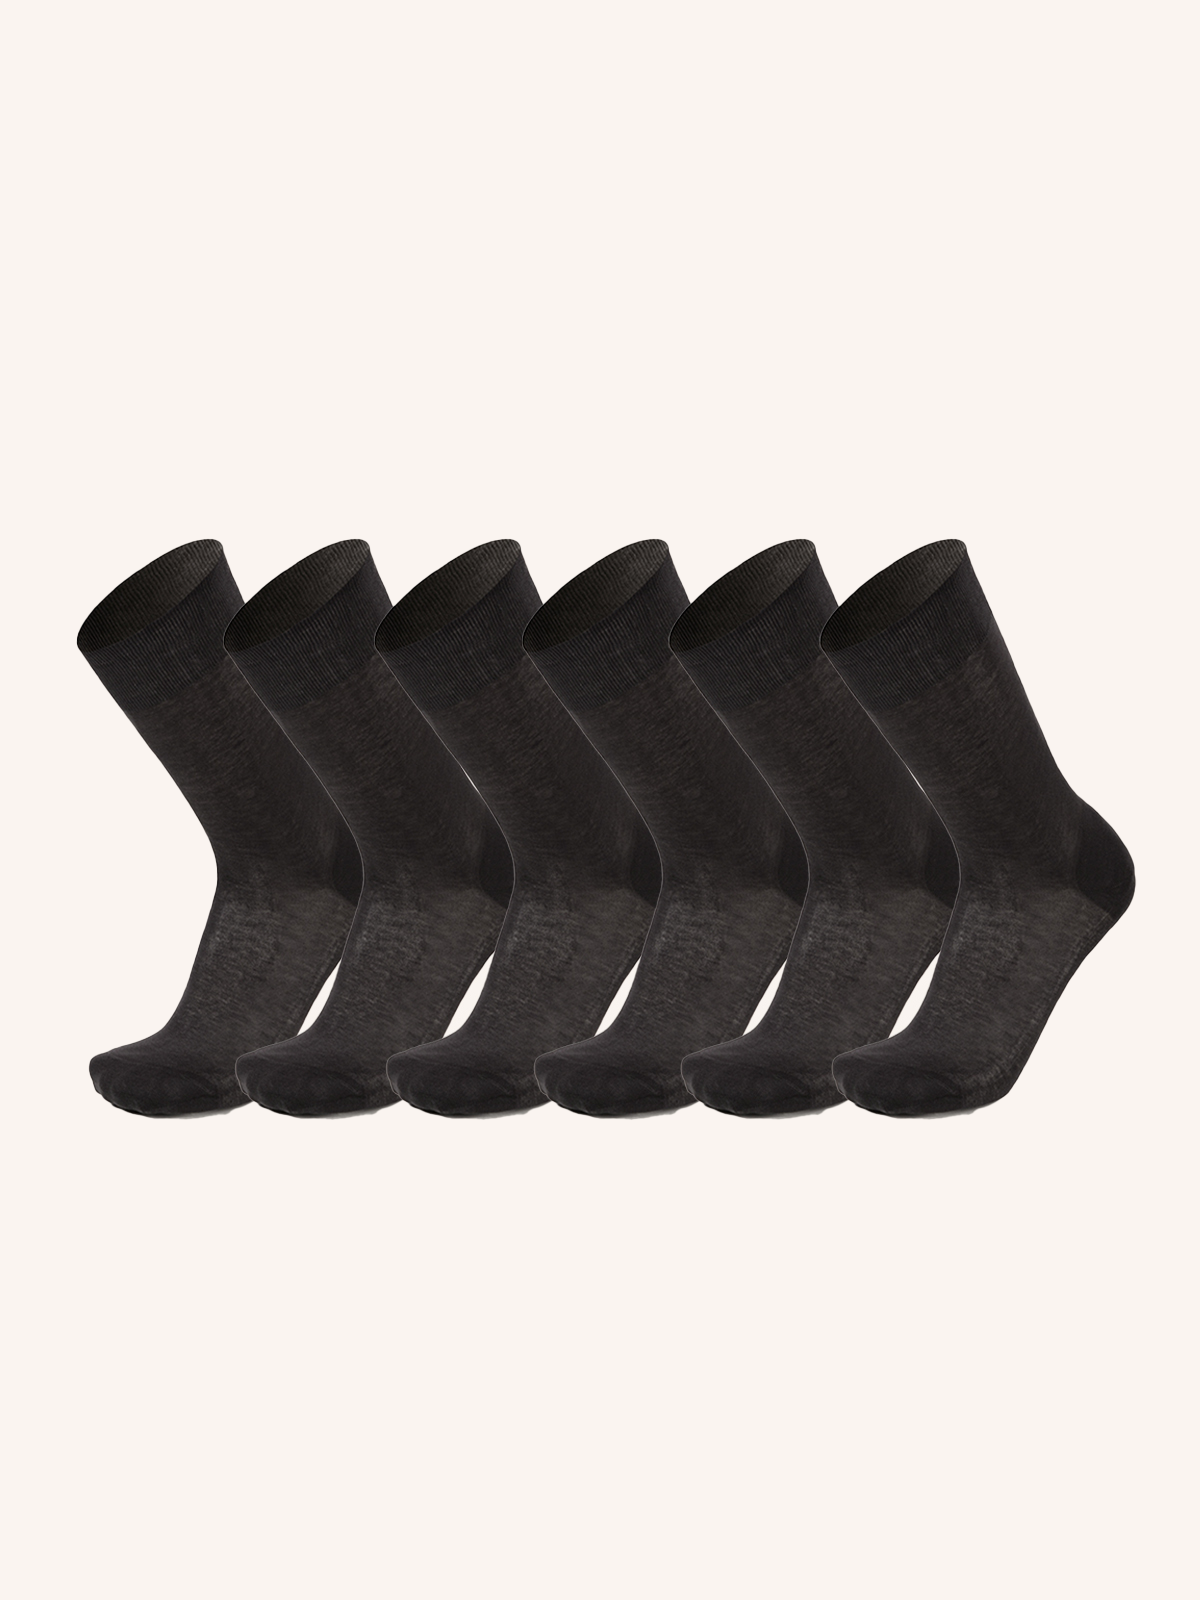 Ultra-thin Scottish Lisle Short Sock for Men | Plain Color | Pack of 6 Pairs | Chiffon C